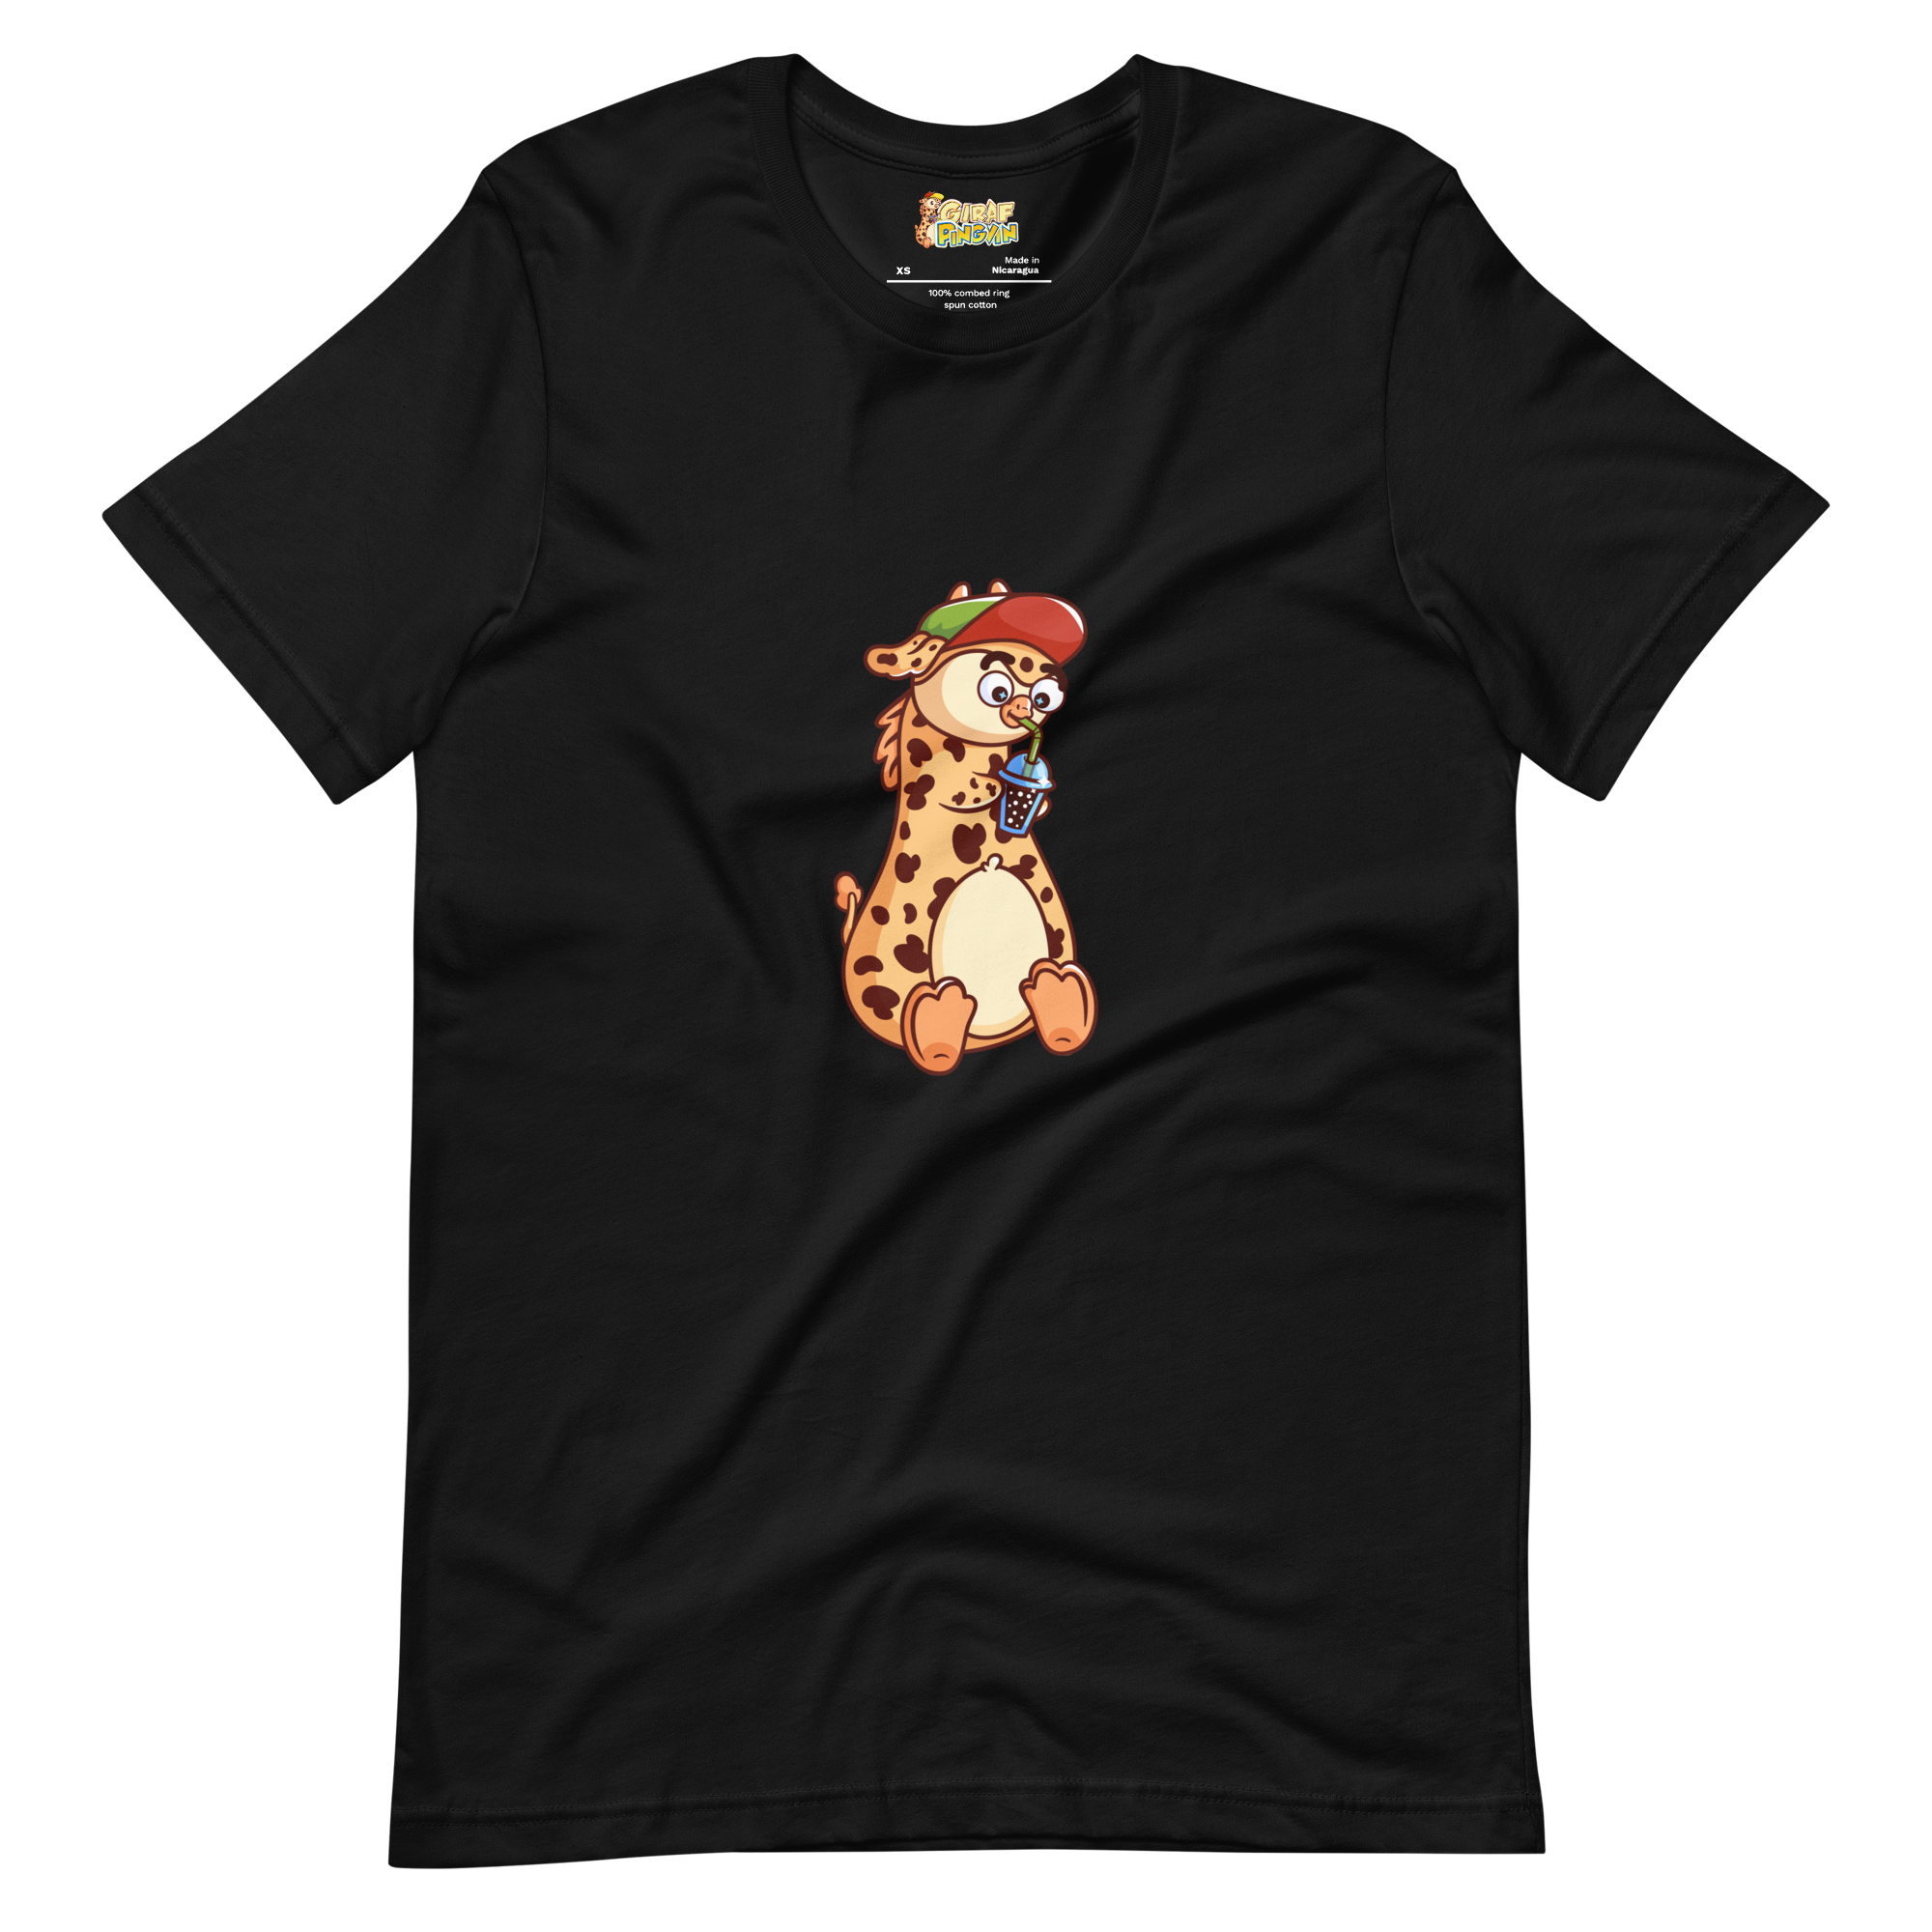 Bubble Tea girafpingvin Voksen T-shirt [Ekatra blød]